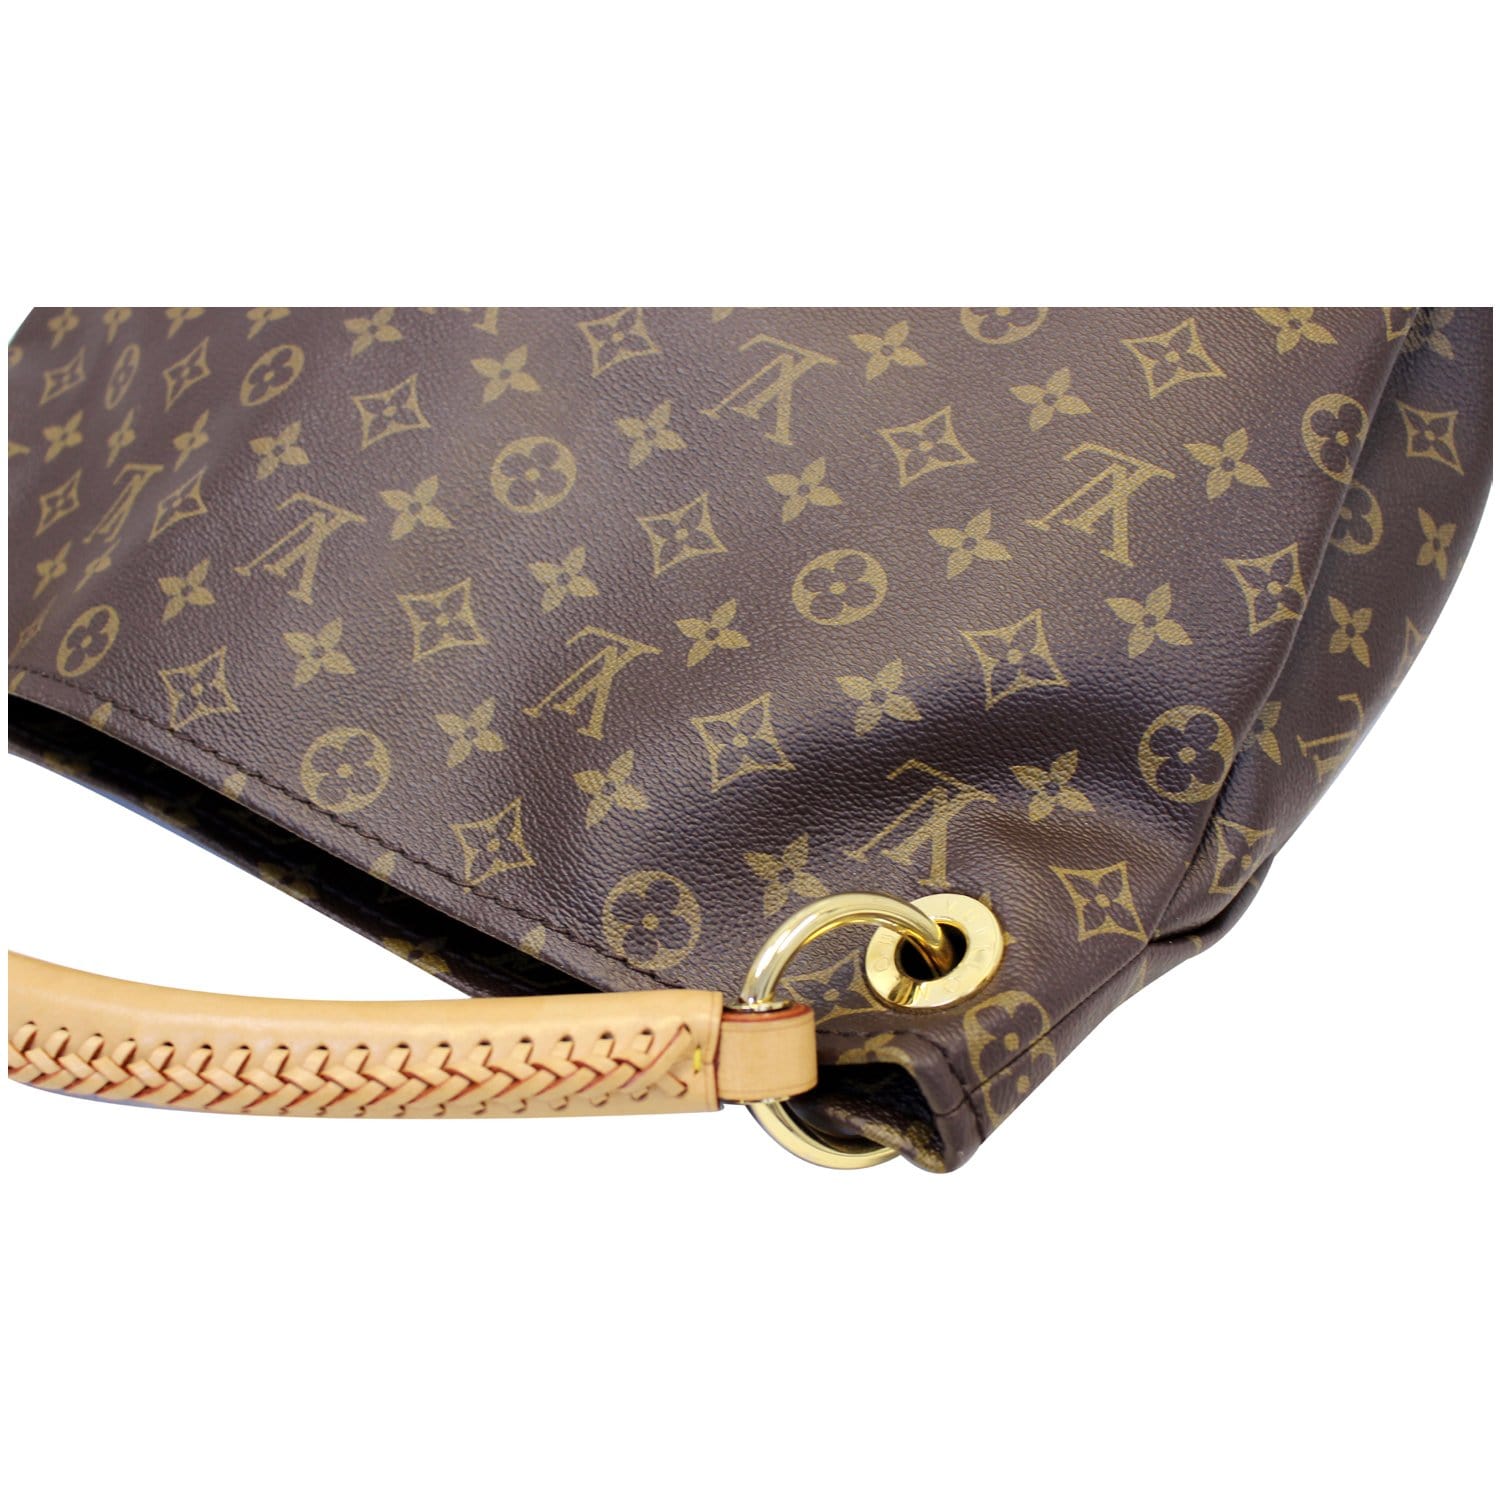 Louis Vuitton 2014 pre-owned Damier Azur Artsy MM Handbag